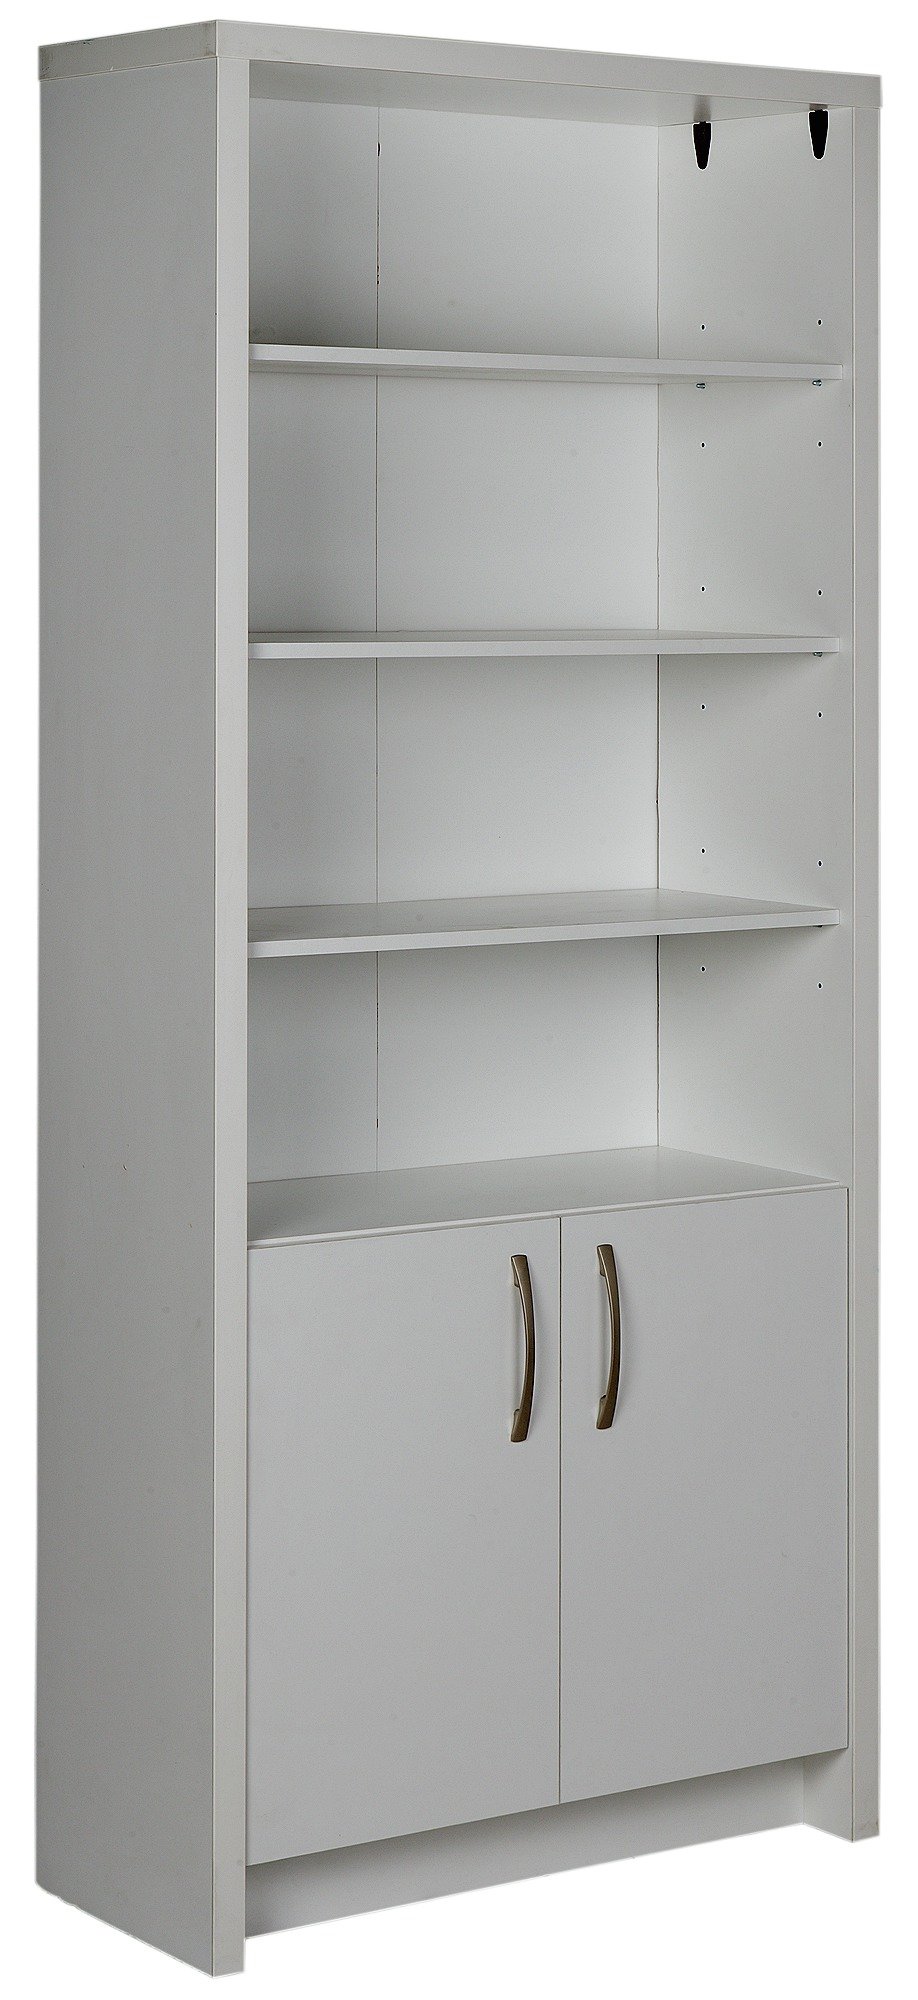 Habitat Venice 3 Shelf Display Cabinet - White